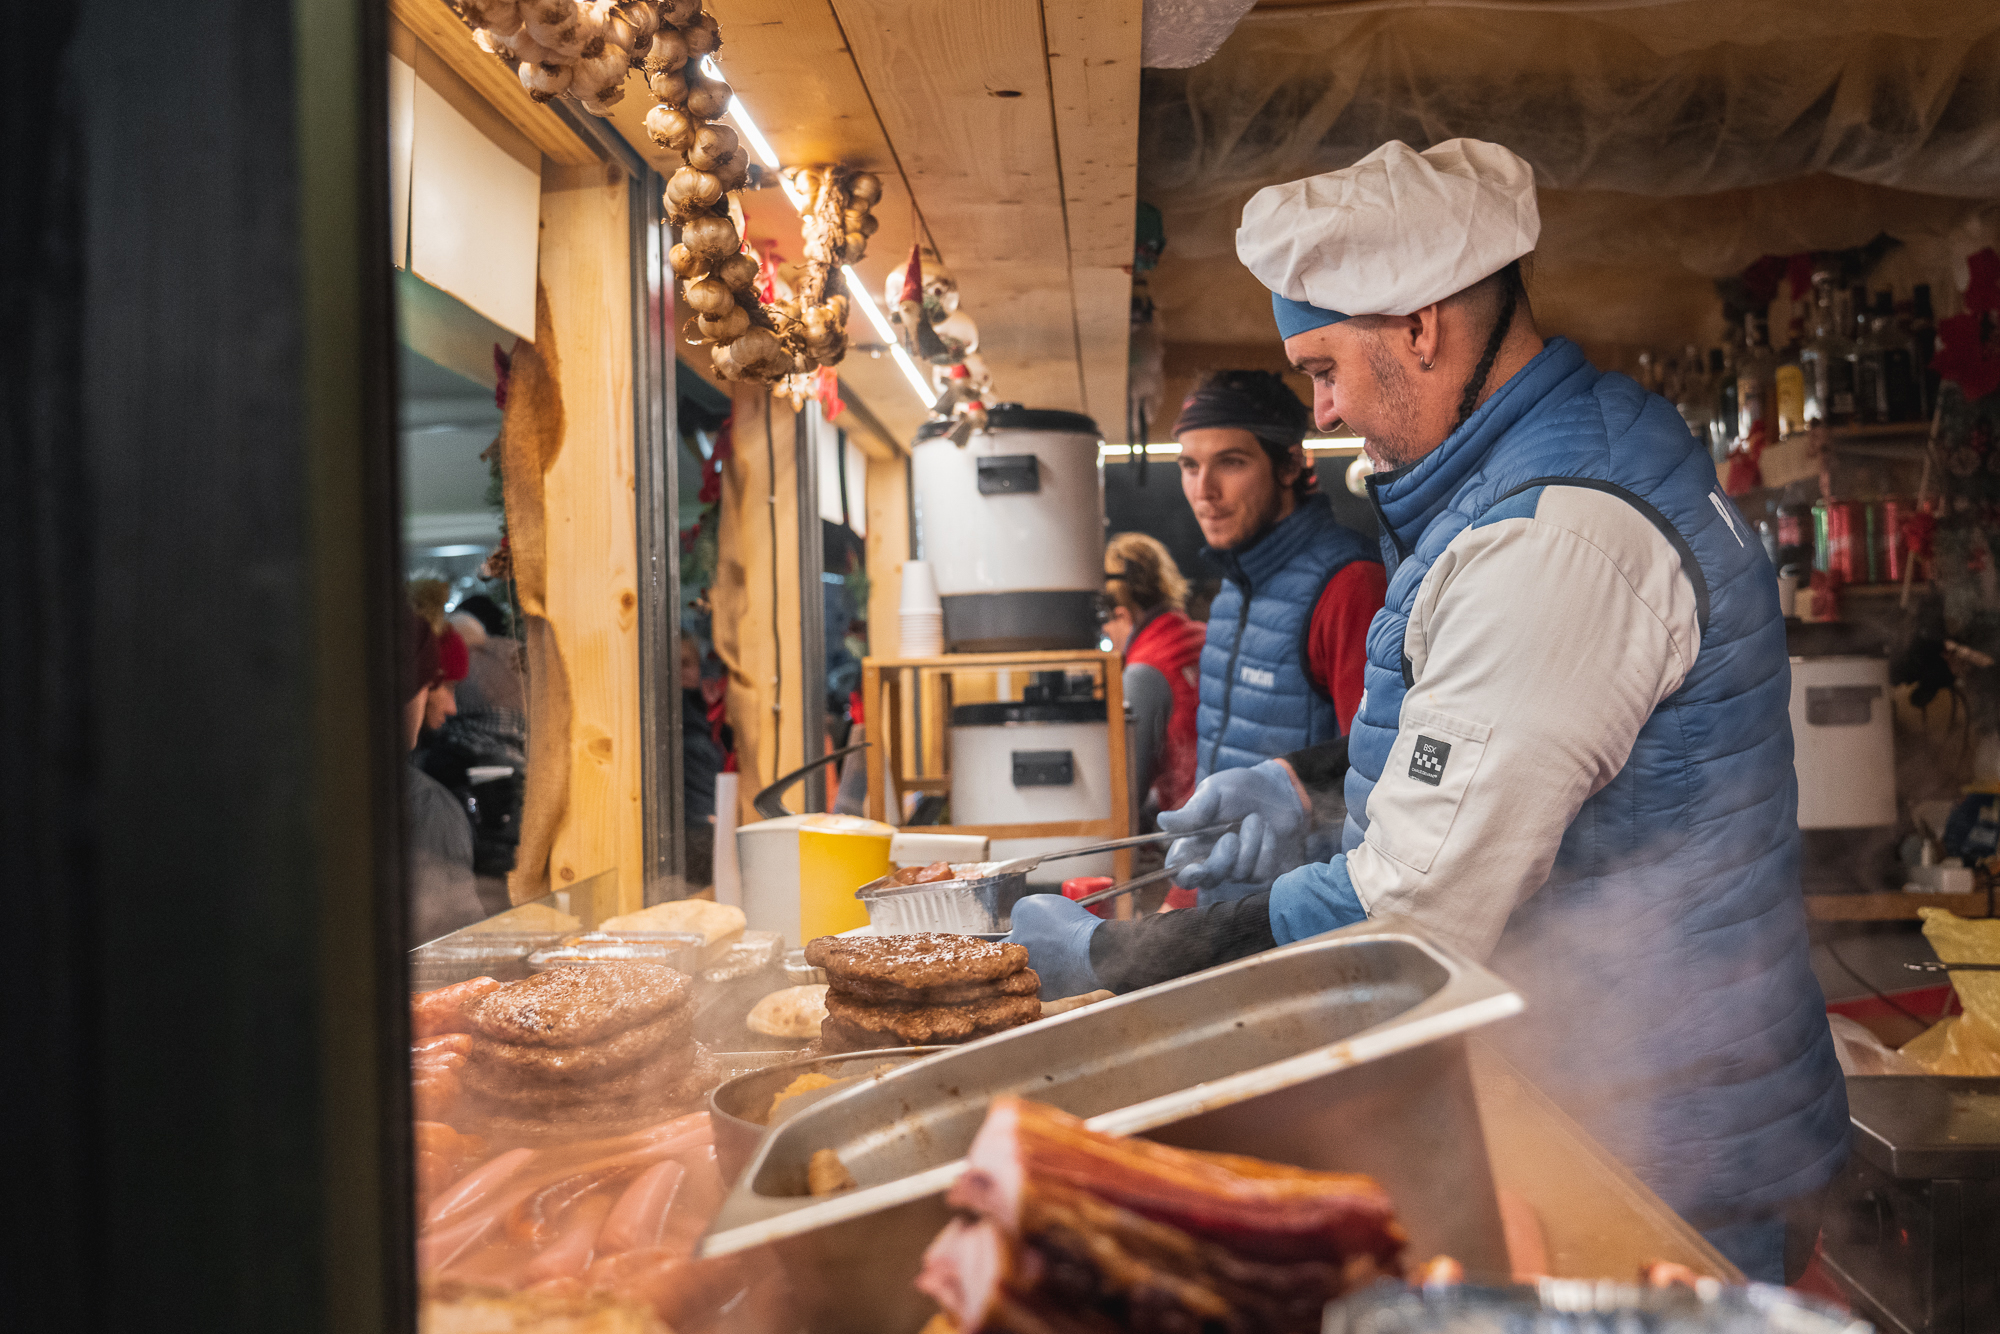 Food vendor at Ljubljana Christmas market